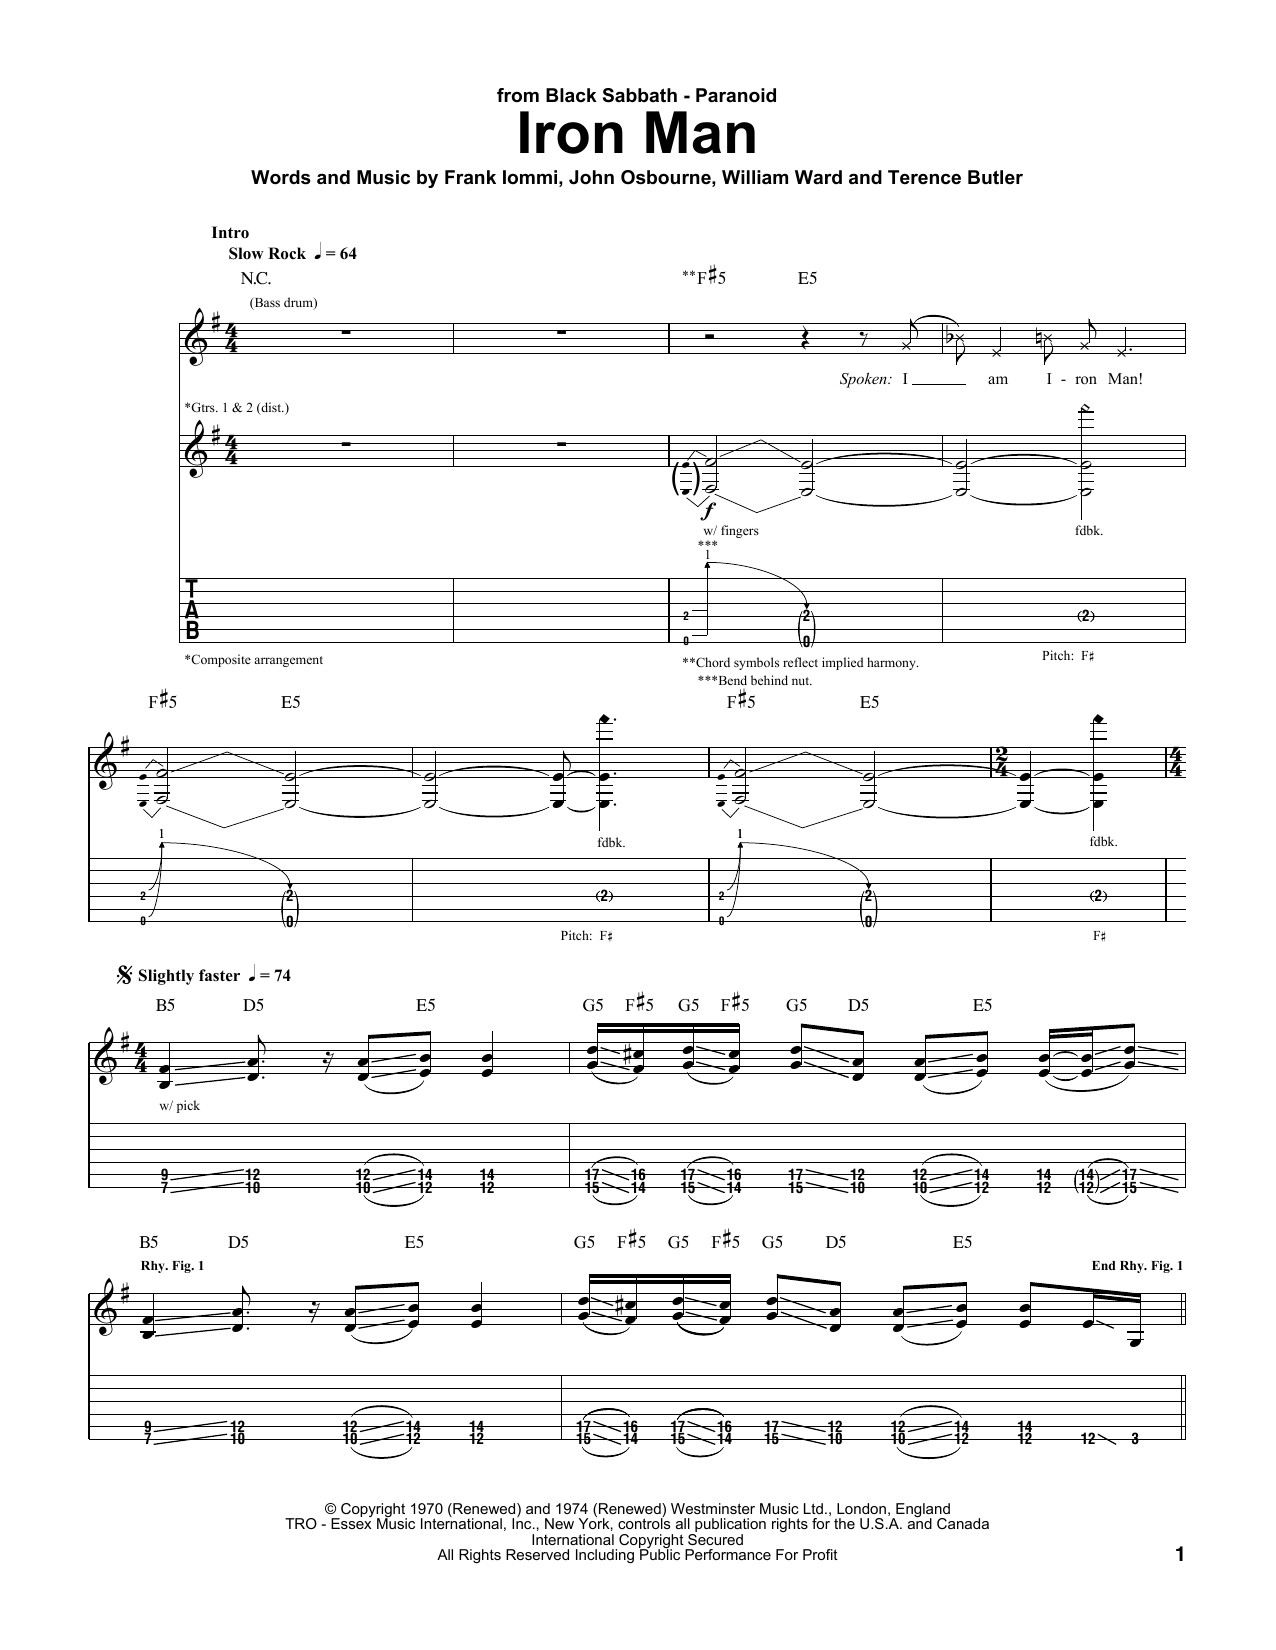 Black Sabbath Iron Man Sheet Music Notes & Chords for Really Easy Guitar - Download or Print PDF